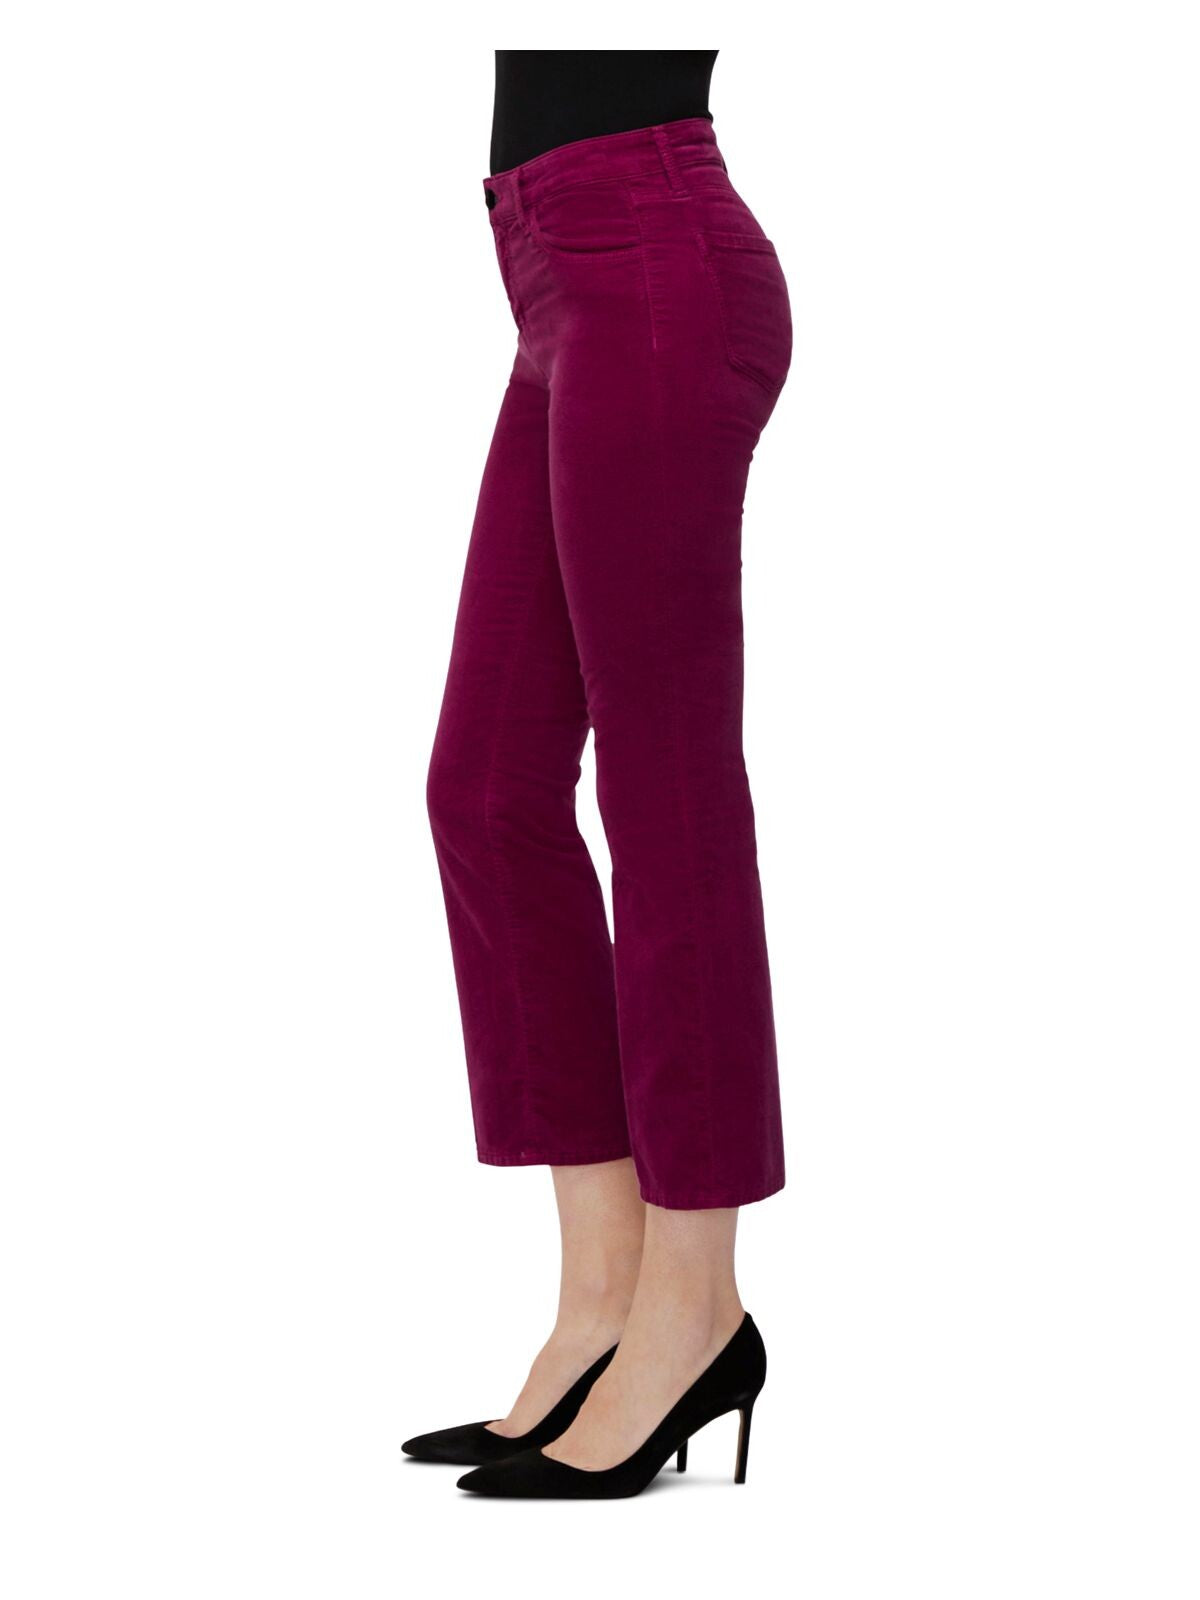 J BRAND Womens Purple Boot Cut Jeans 25 Waist